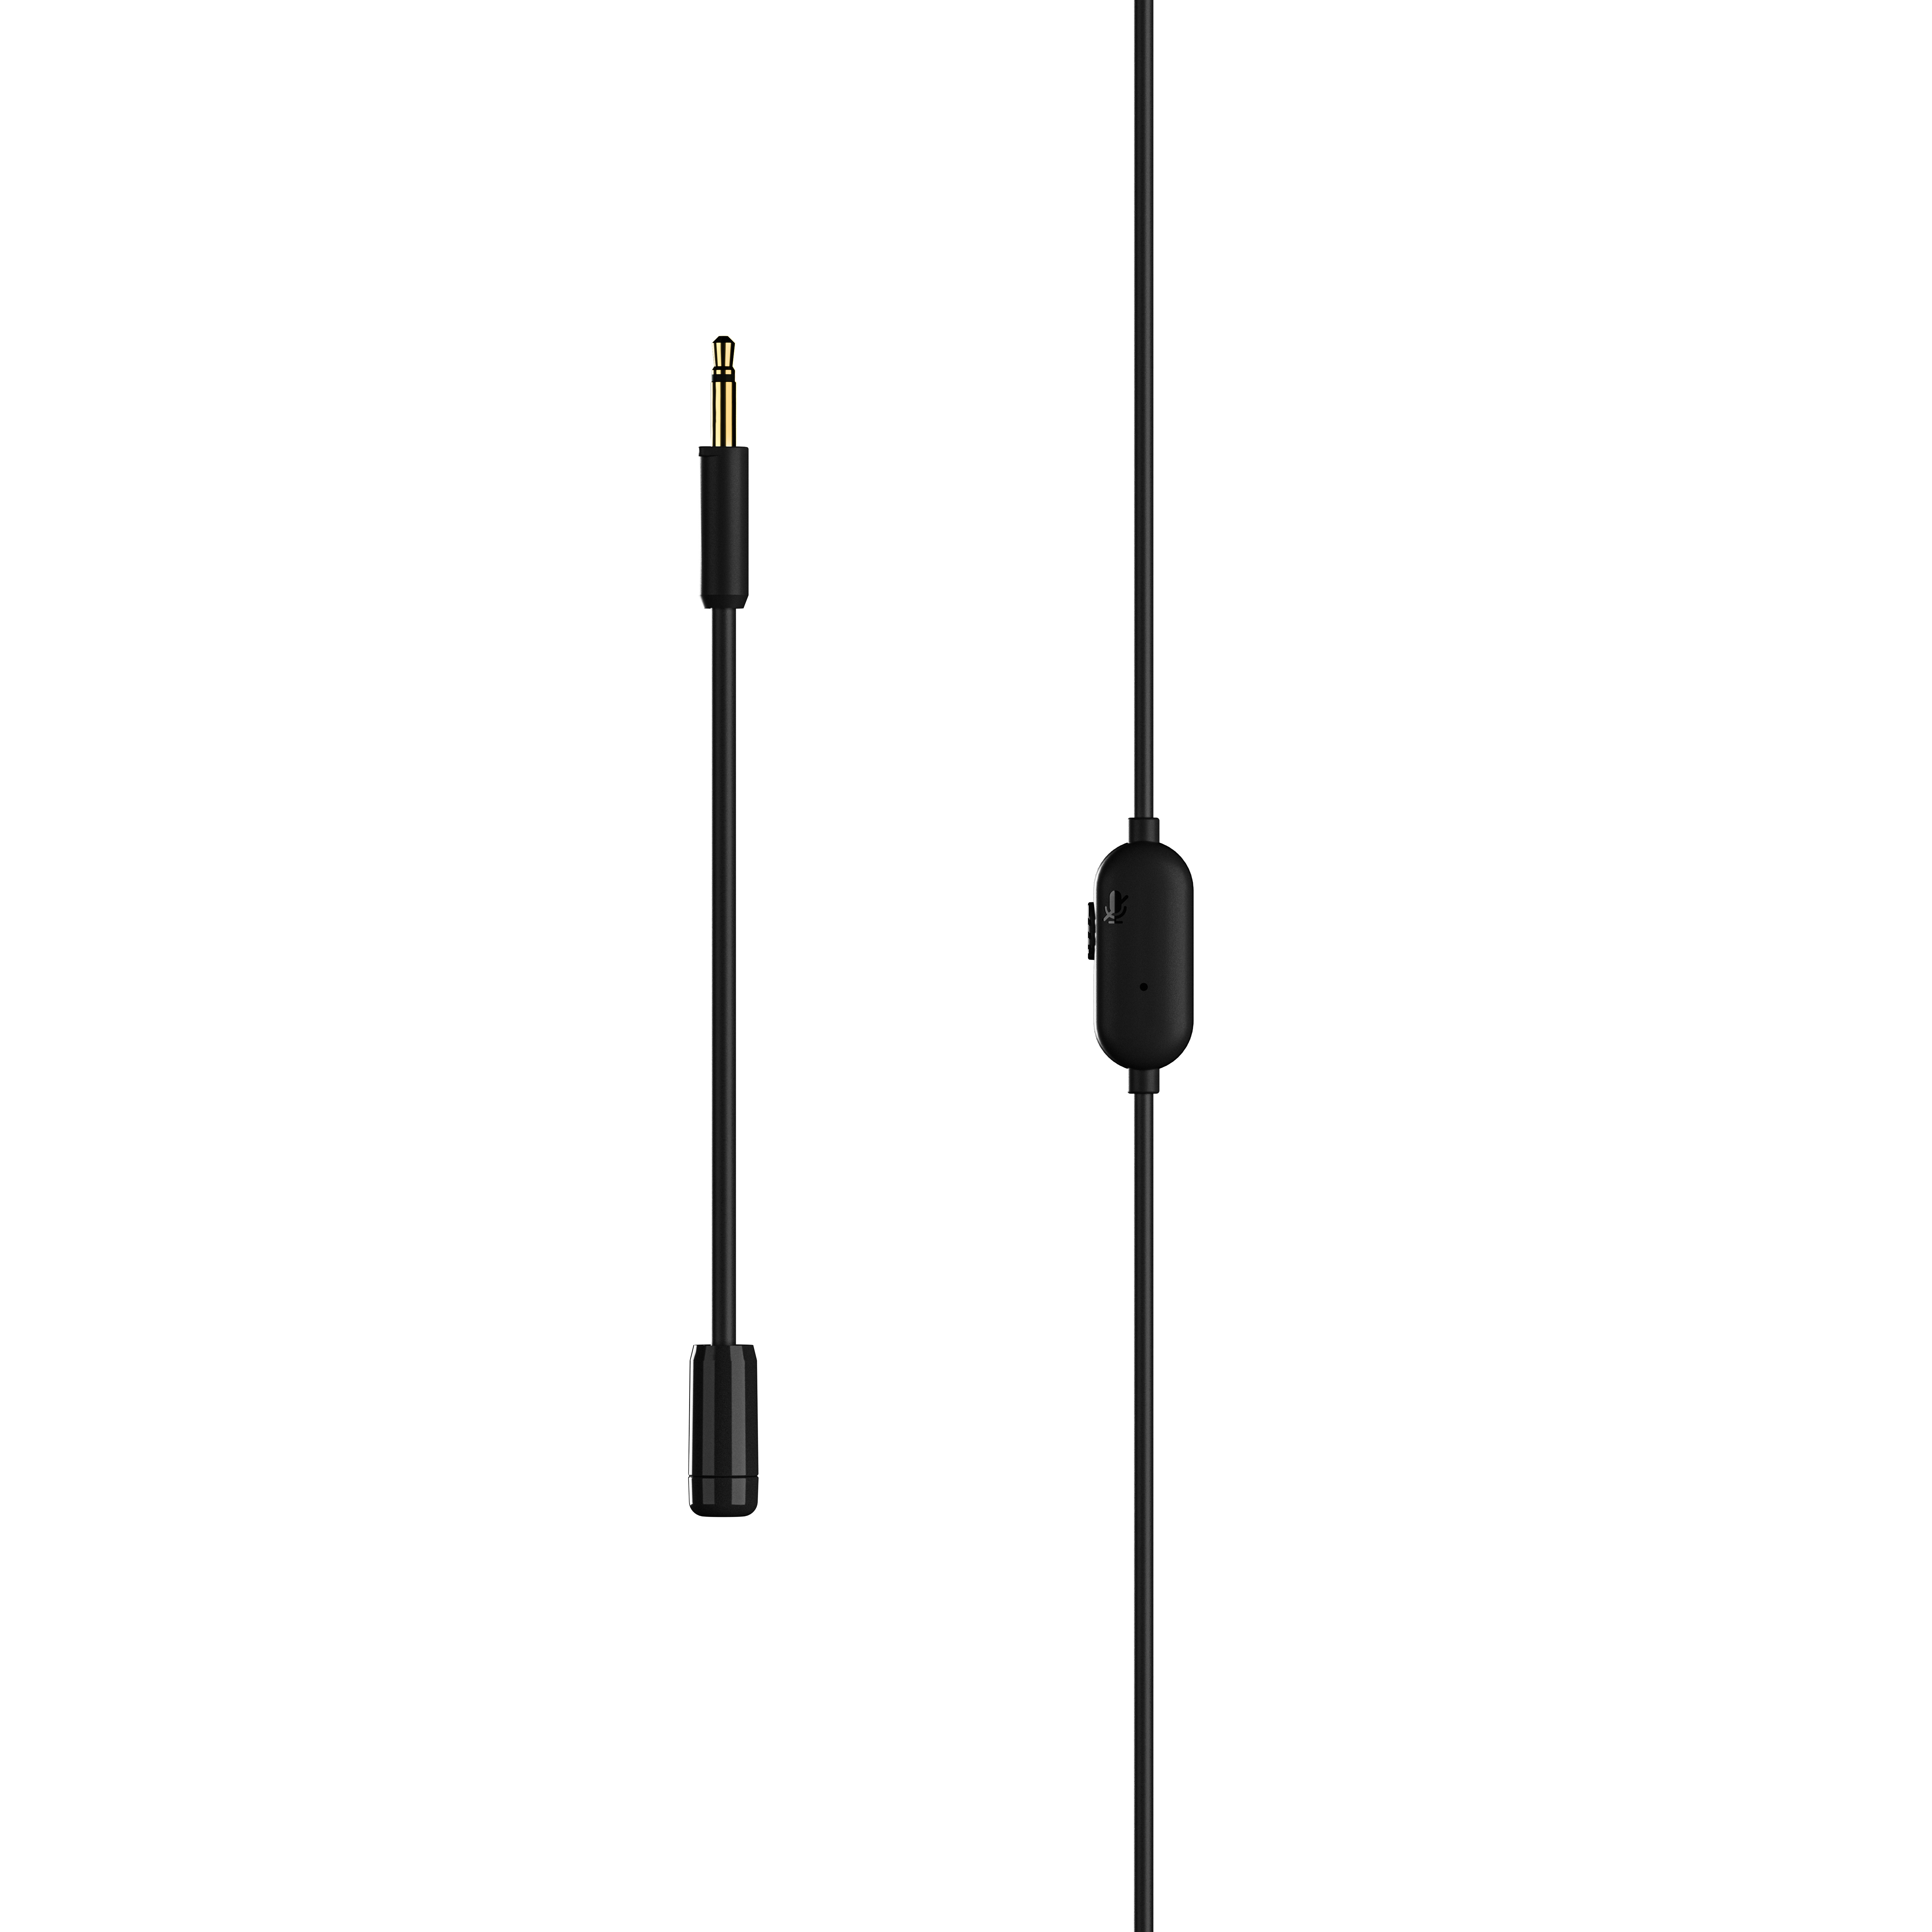 Kopfhörer - TUSQ STEELSERIES In-ear Schwarz Gaming-Headset, Mobiles